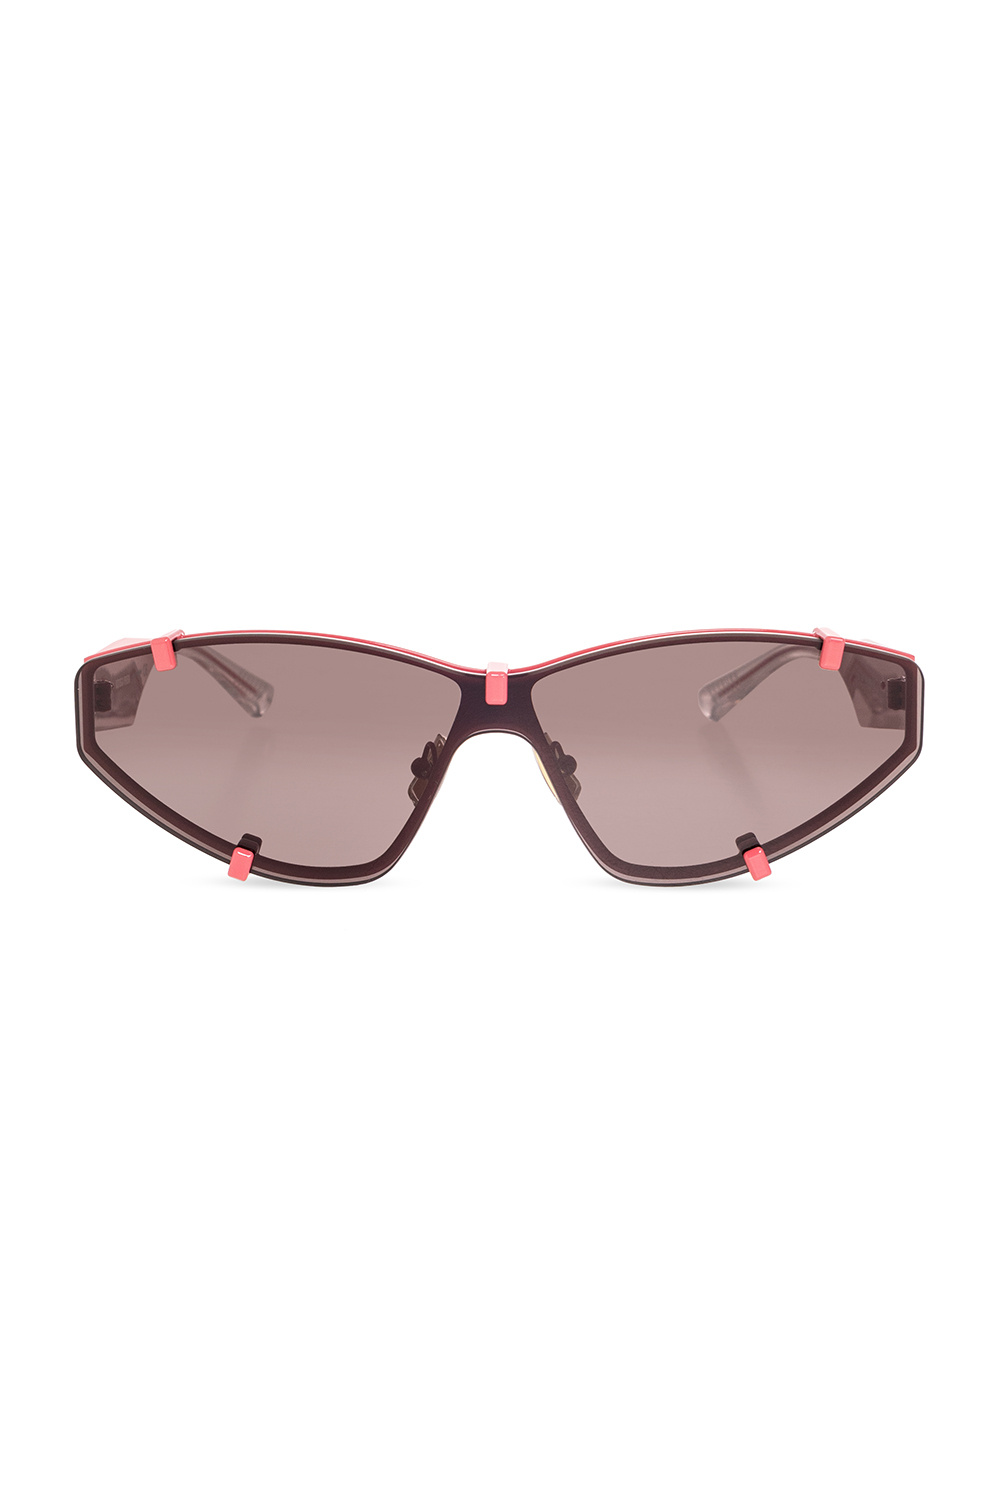 Bottega Veneta Clip-On Sunglasses Case